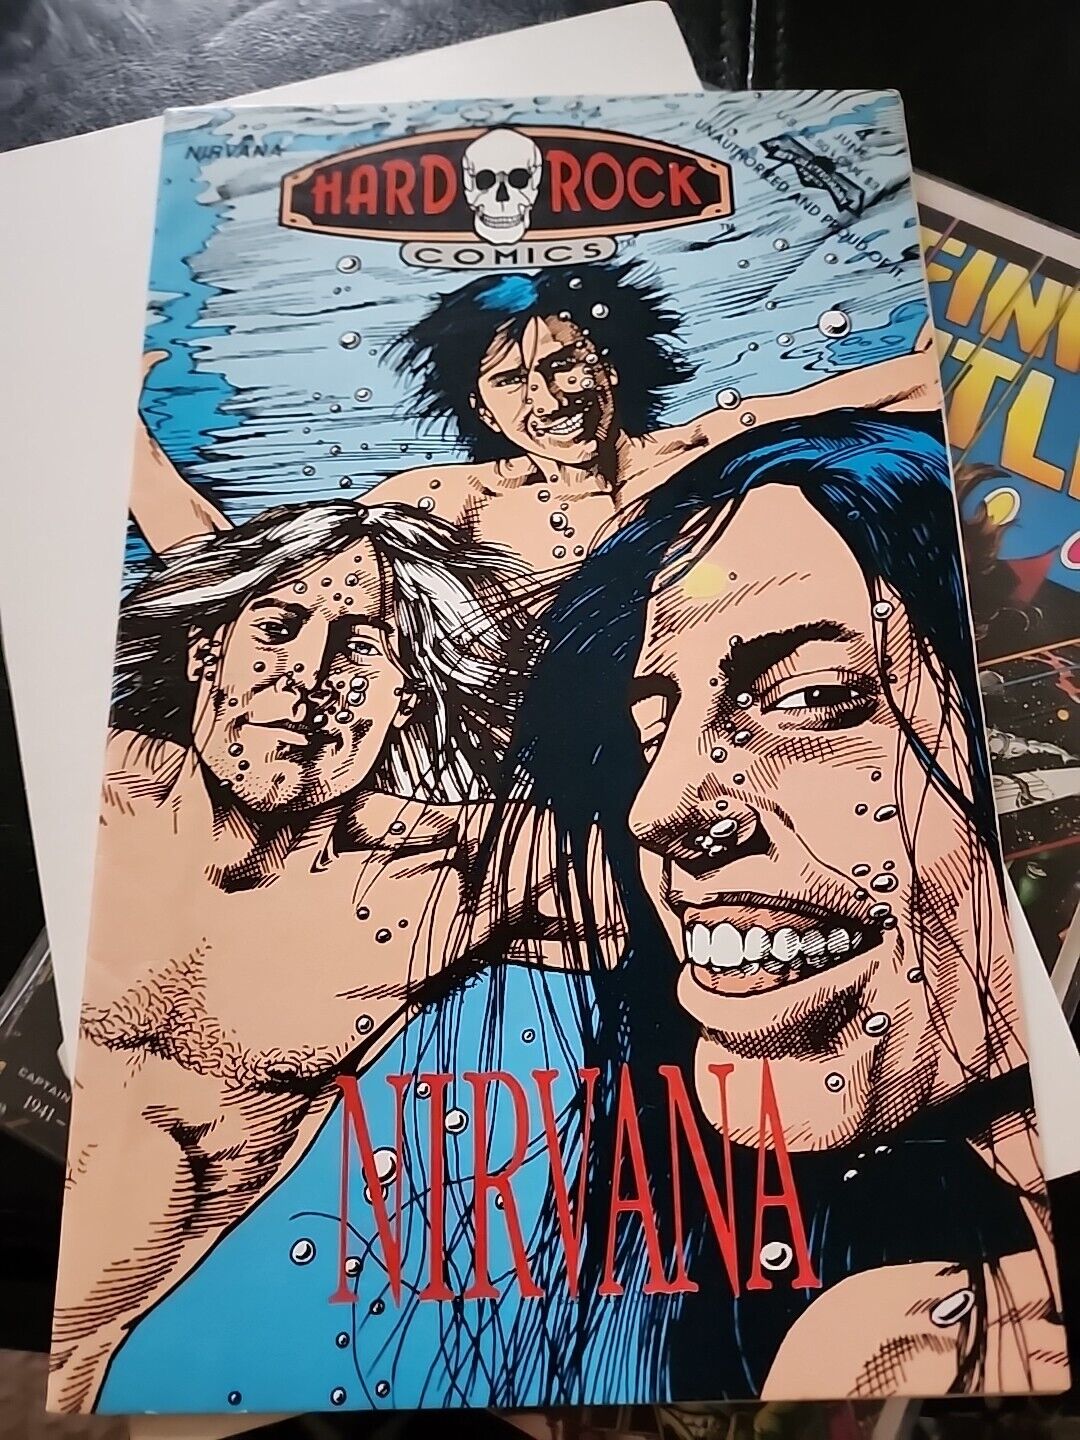 Hard Rock Comics. Nirvana